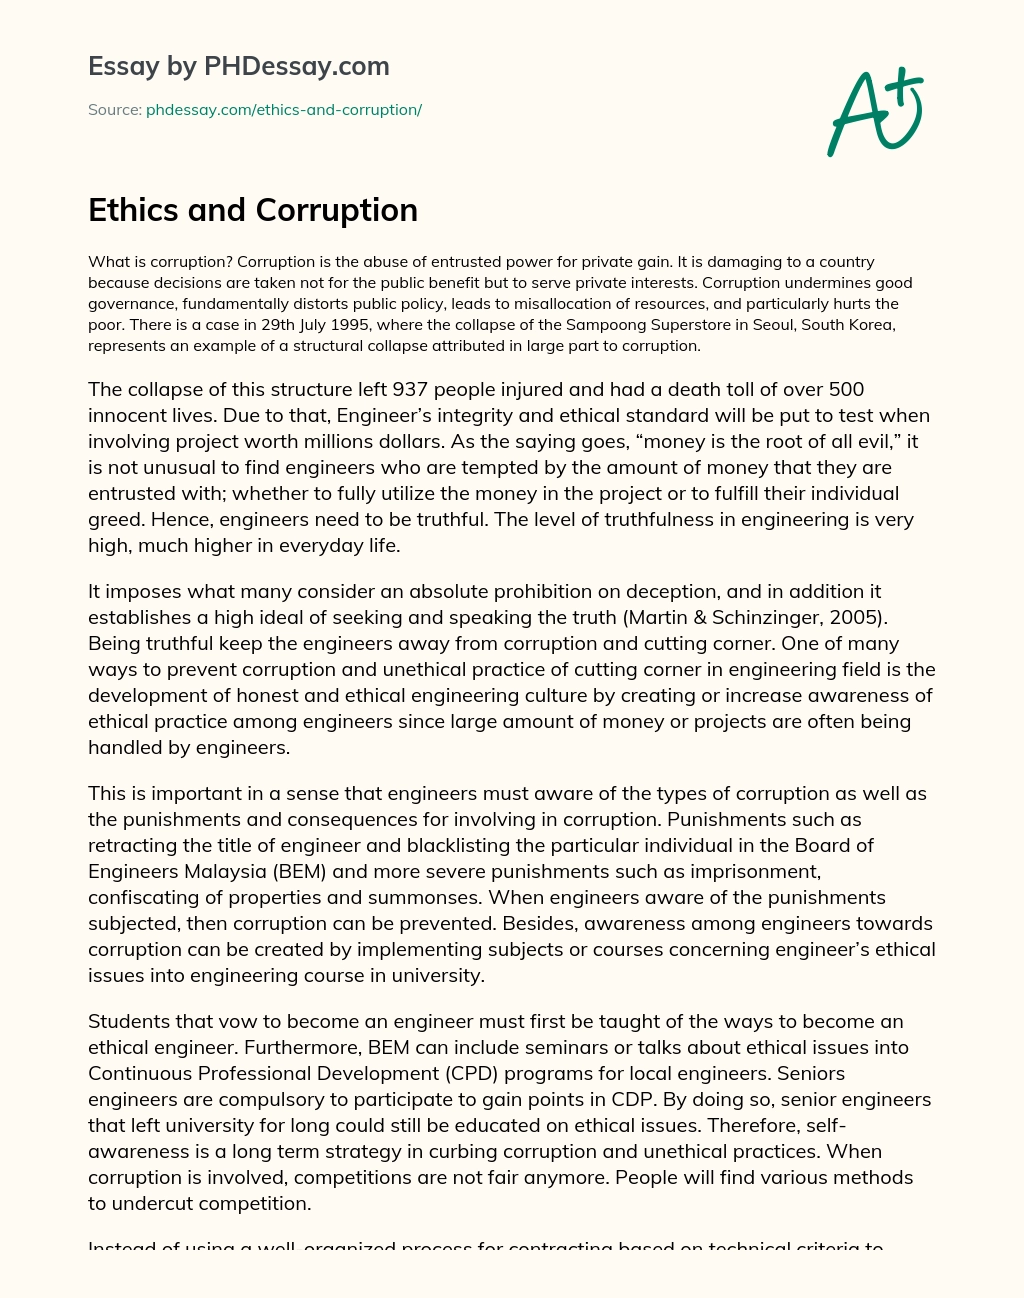 Ethics and Corruption essay